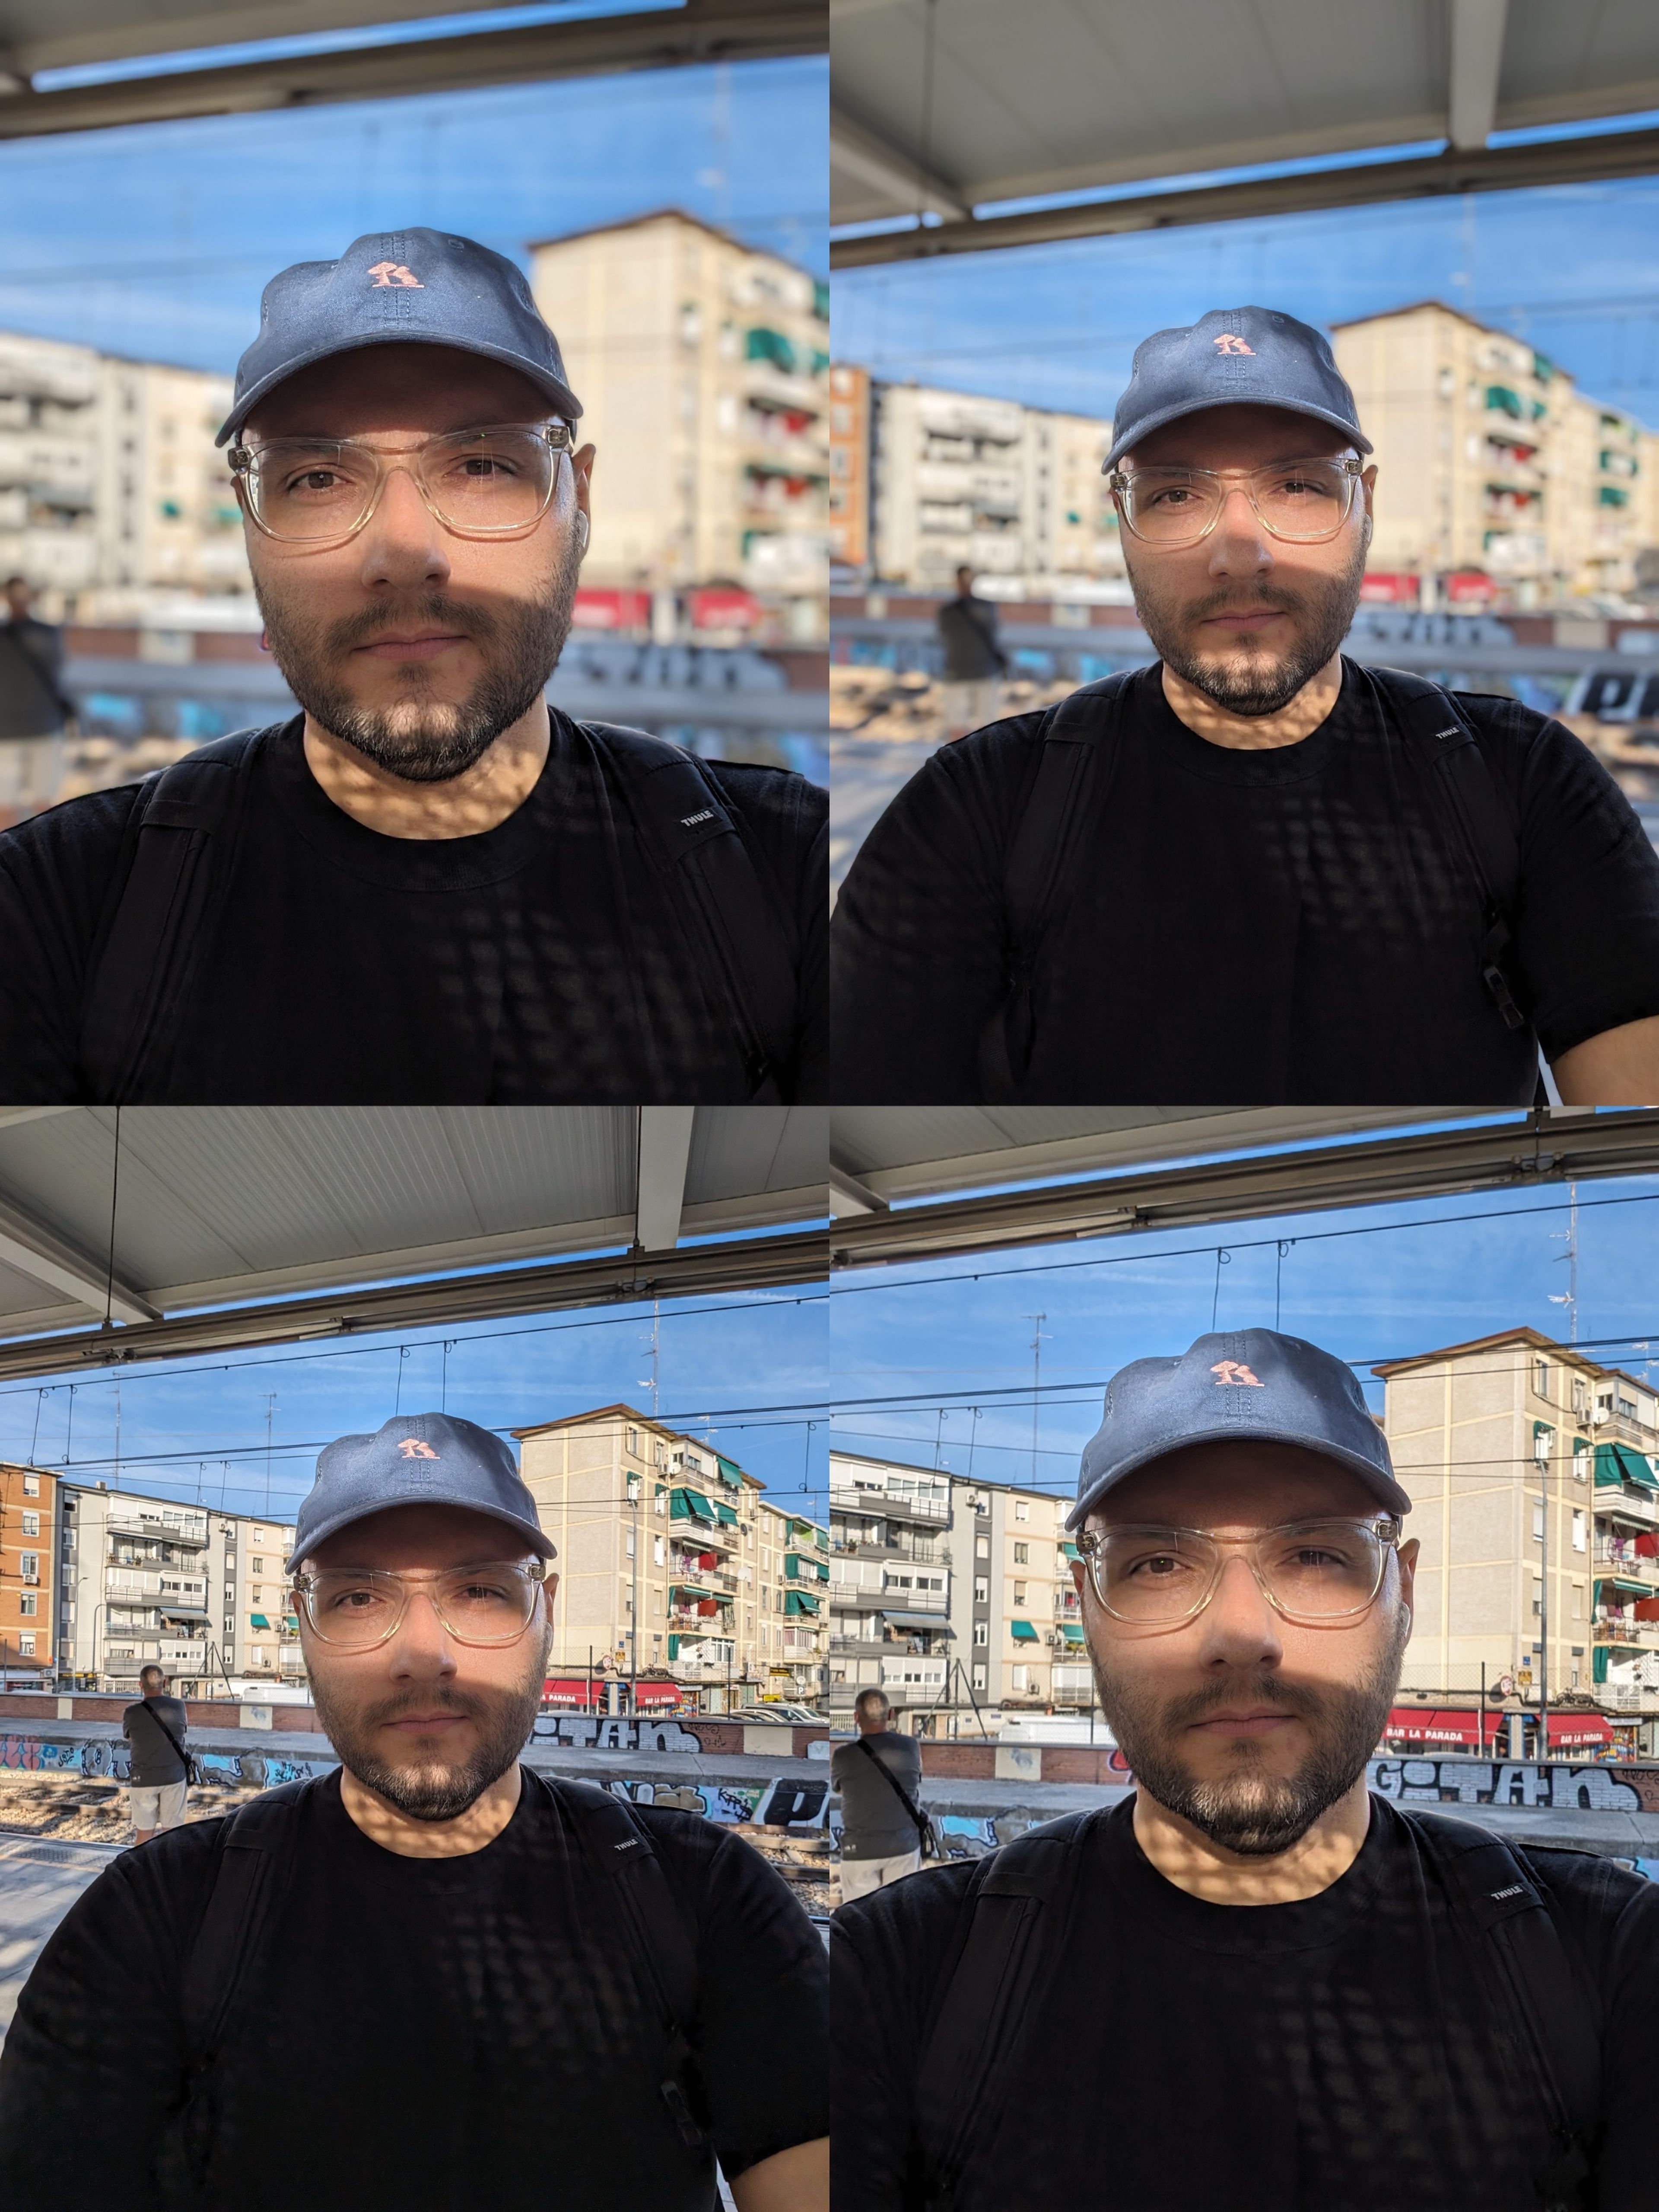 Pruebas de selfi con Pixel 8 Pro